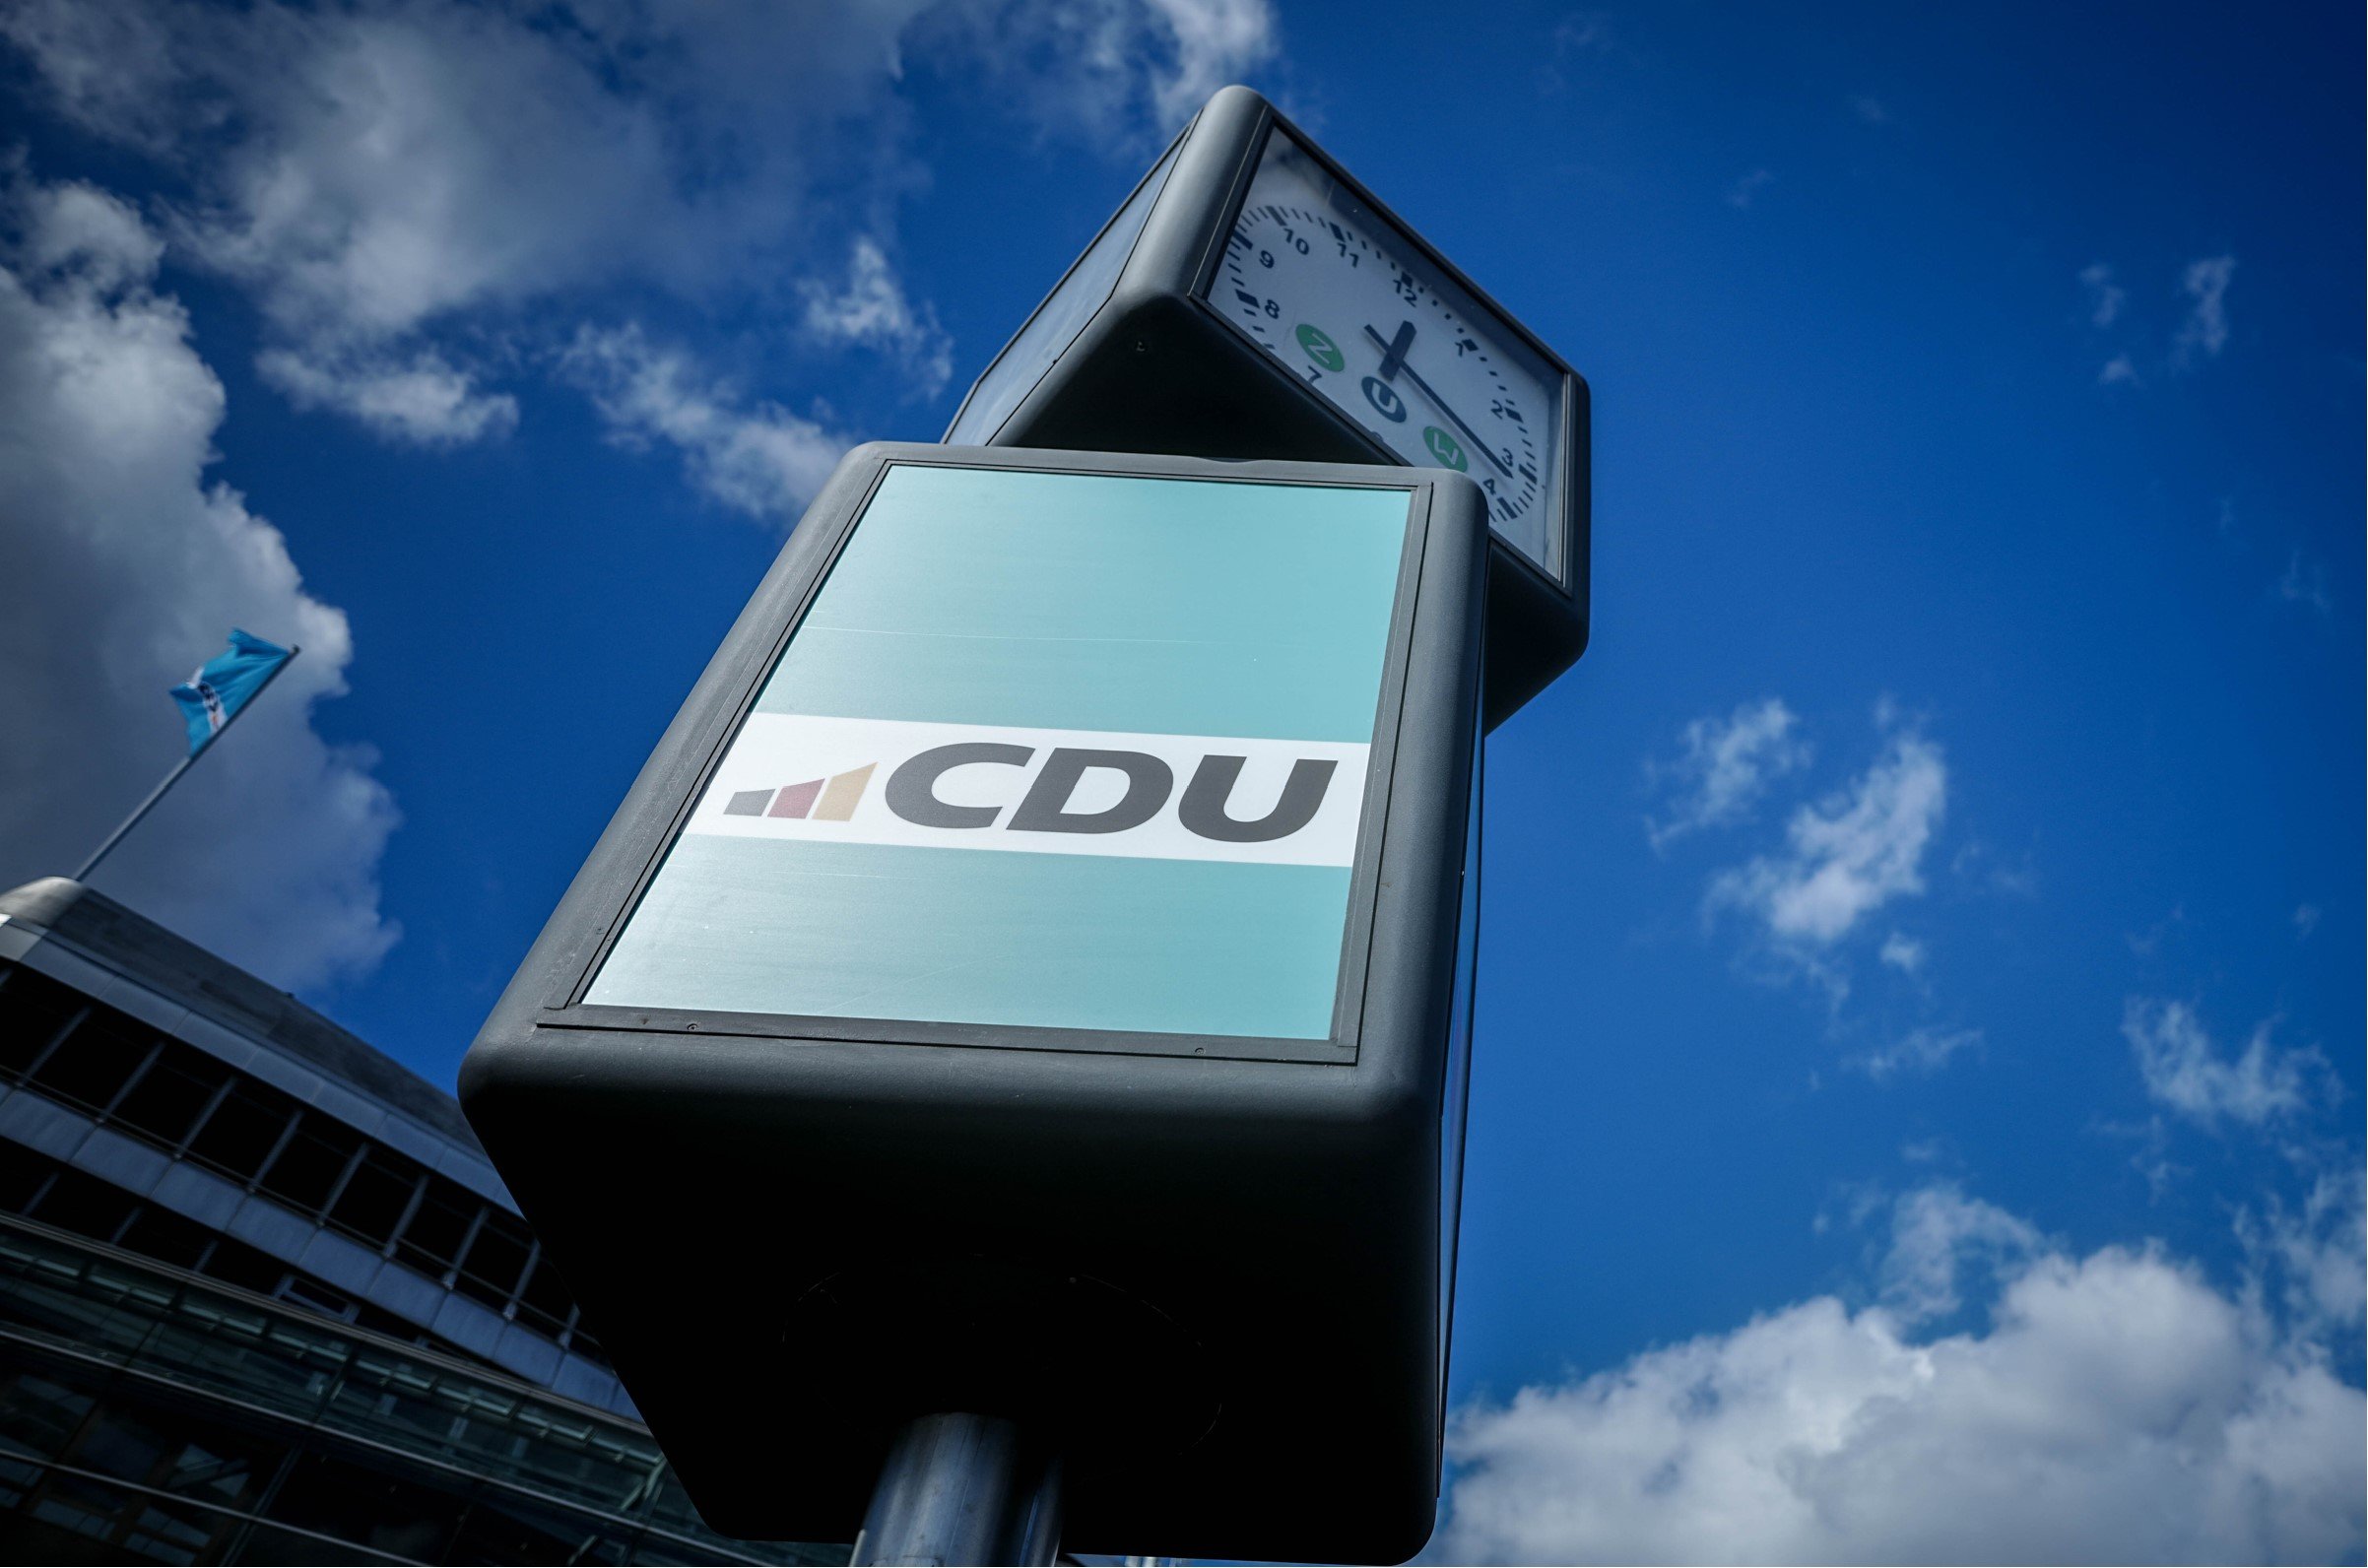 The German conservative CDU's new logo.